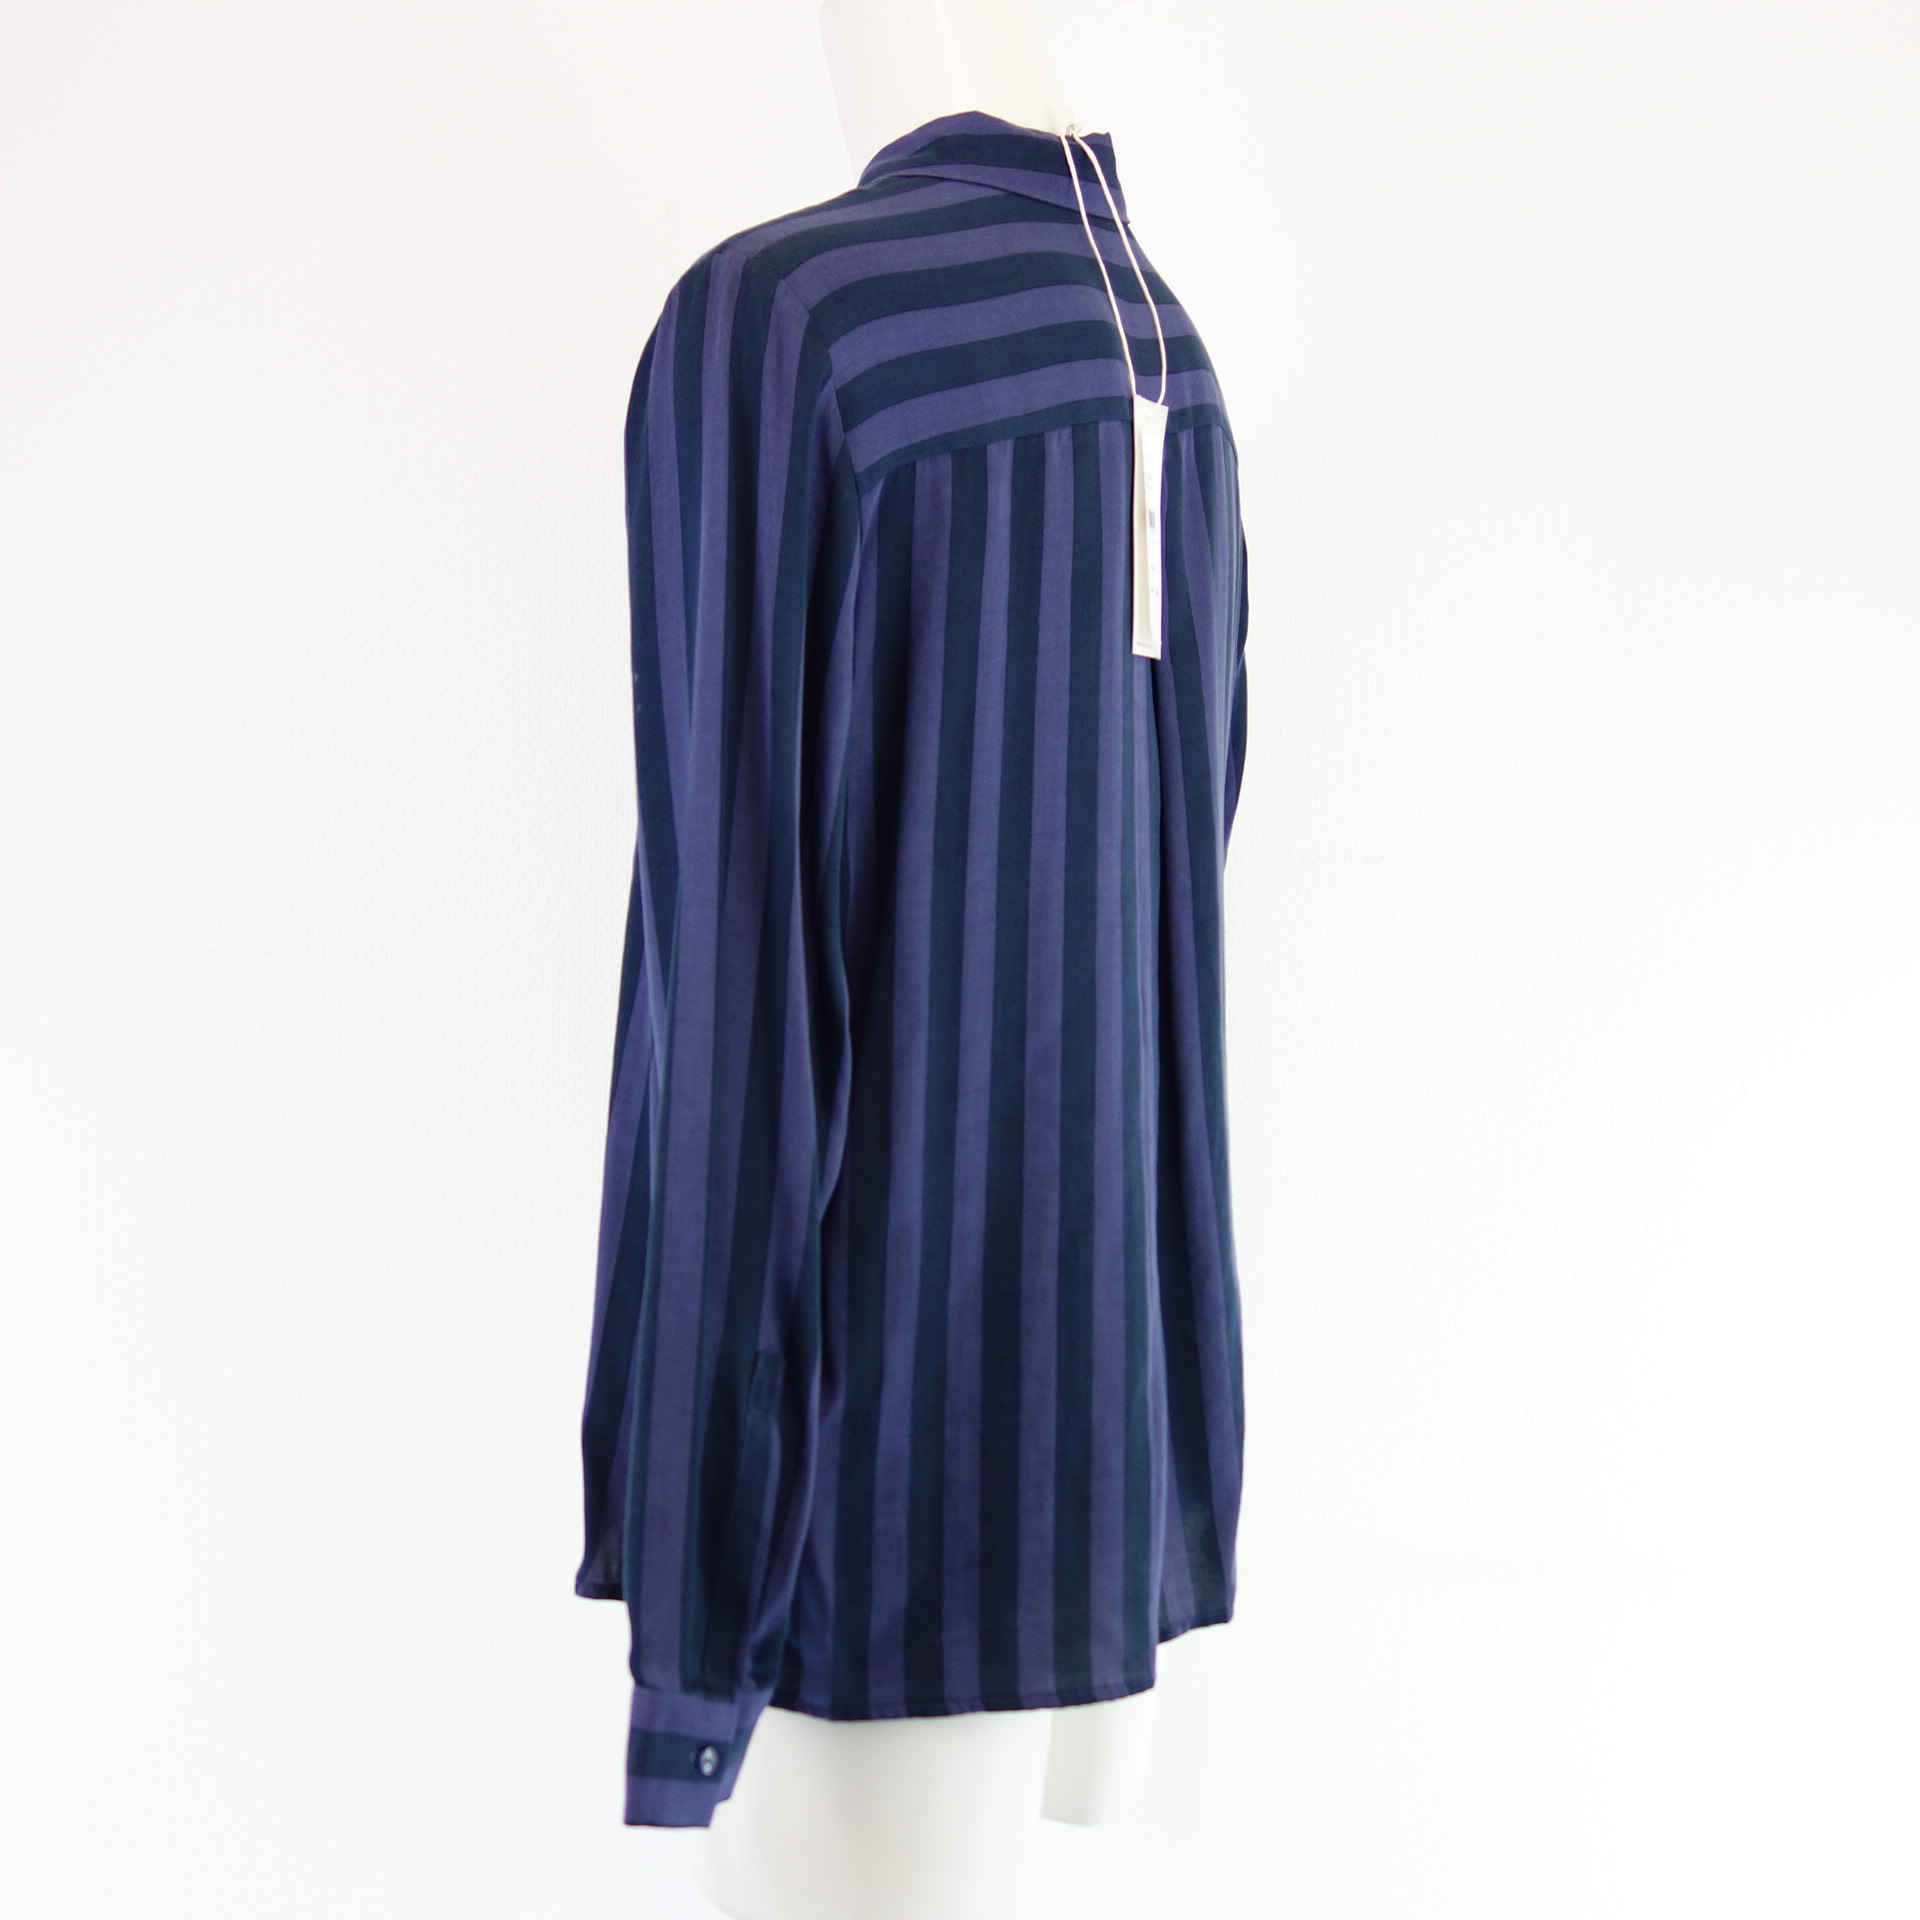 MILANO Italy Damen Bluse Shirt Tunika Oberteil Blautöne Streifen 100% Viskose